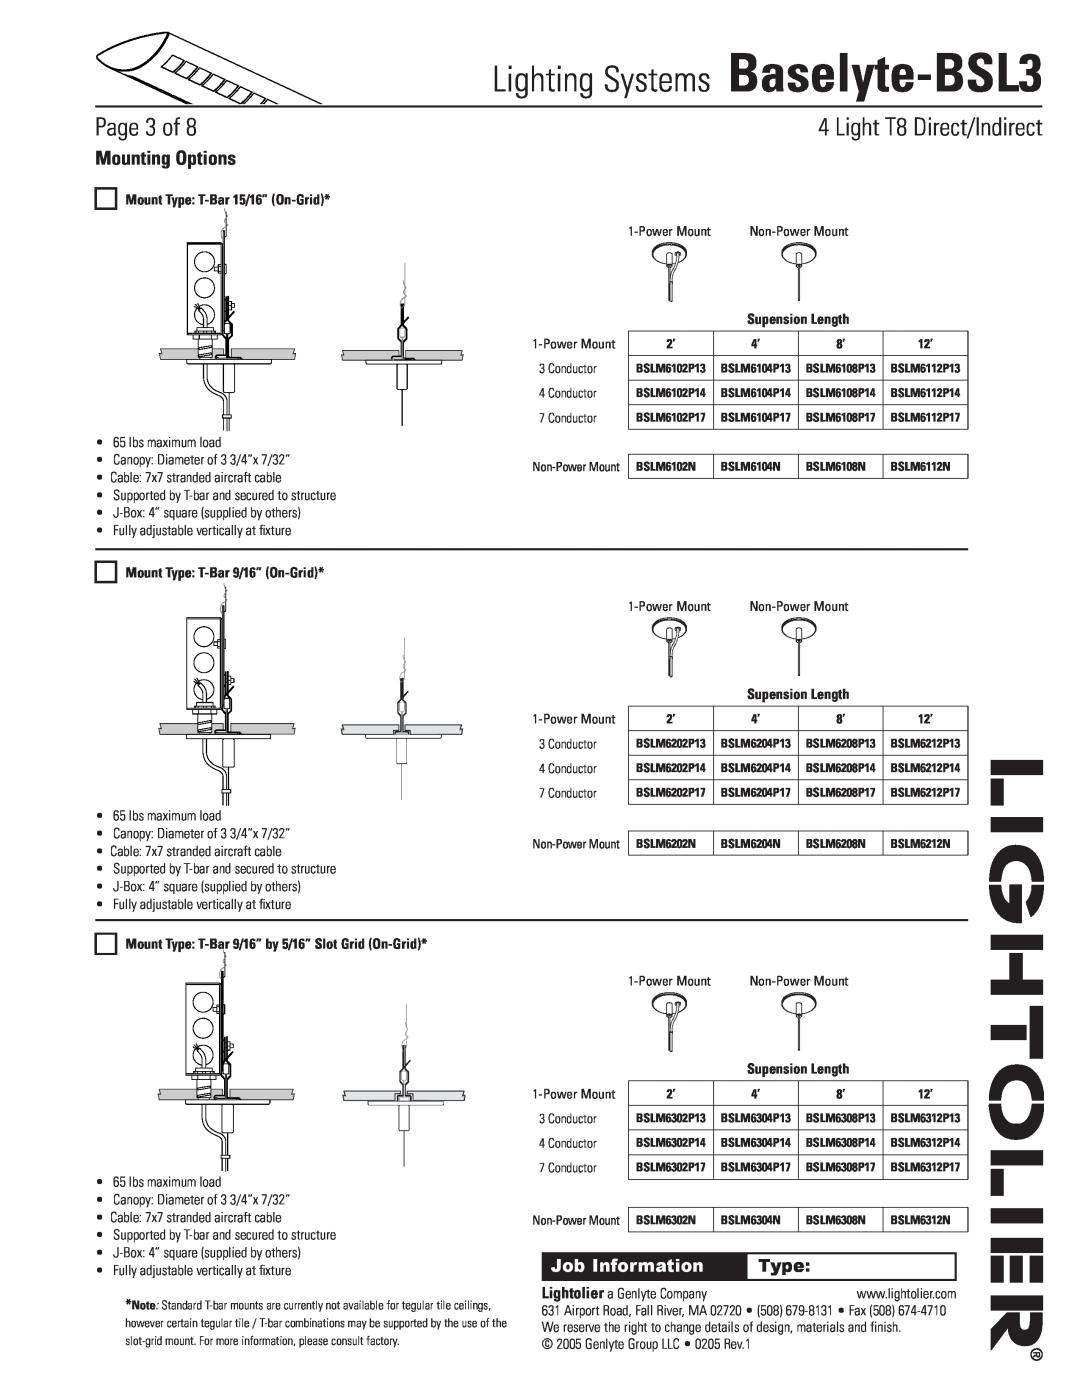 Lightolier Baselyte-BSL3 Mounting Options, Mount Type T-Bar15/16” On-Grid, Supension Length, Mount Type T-Bar9/16” On-Grid 